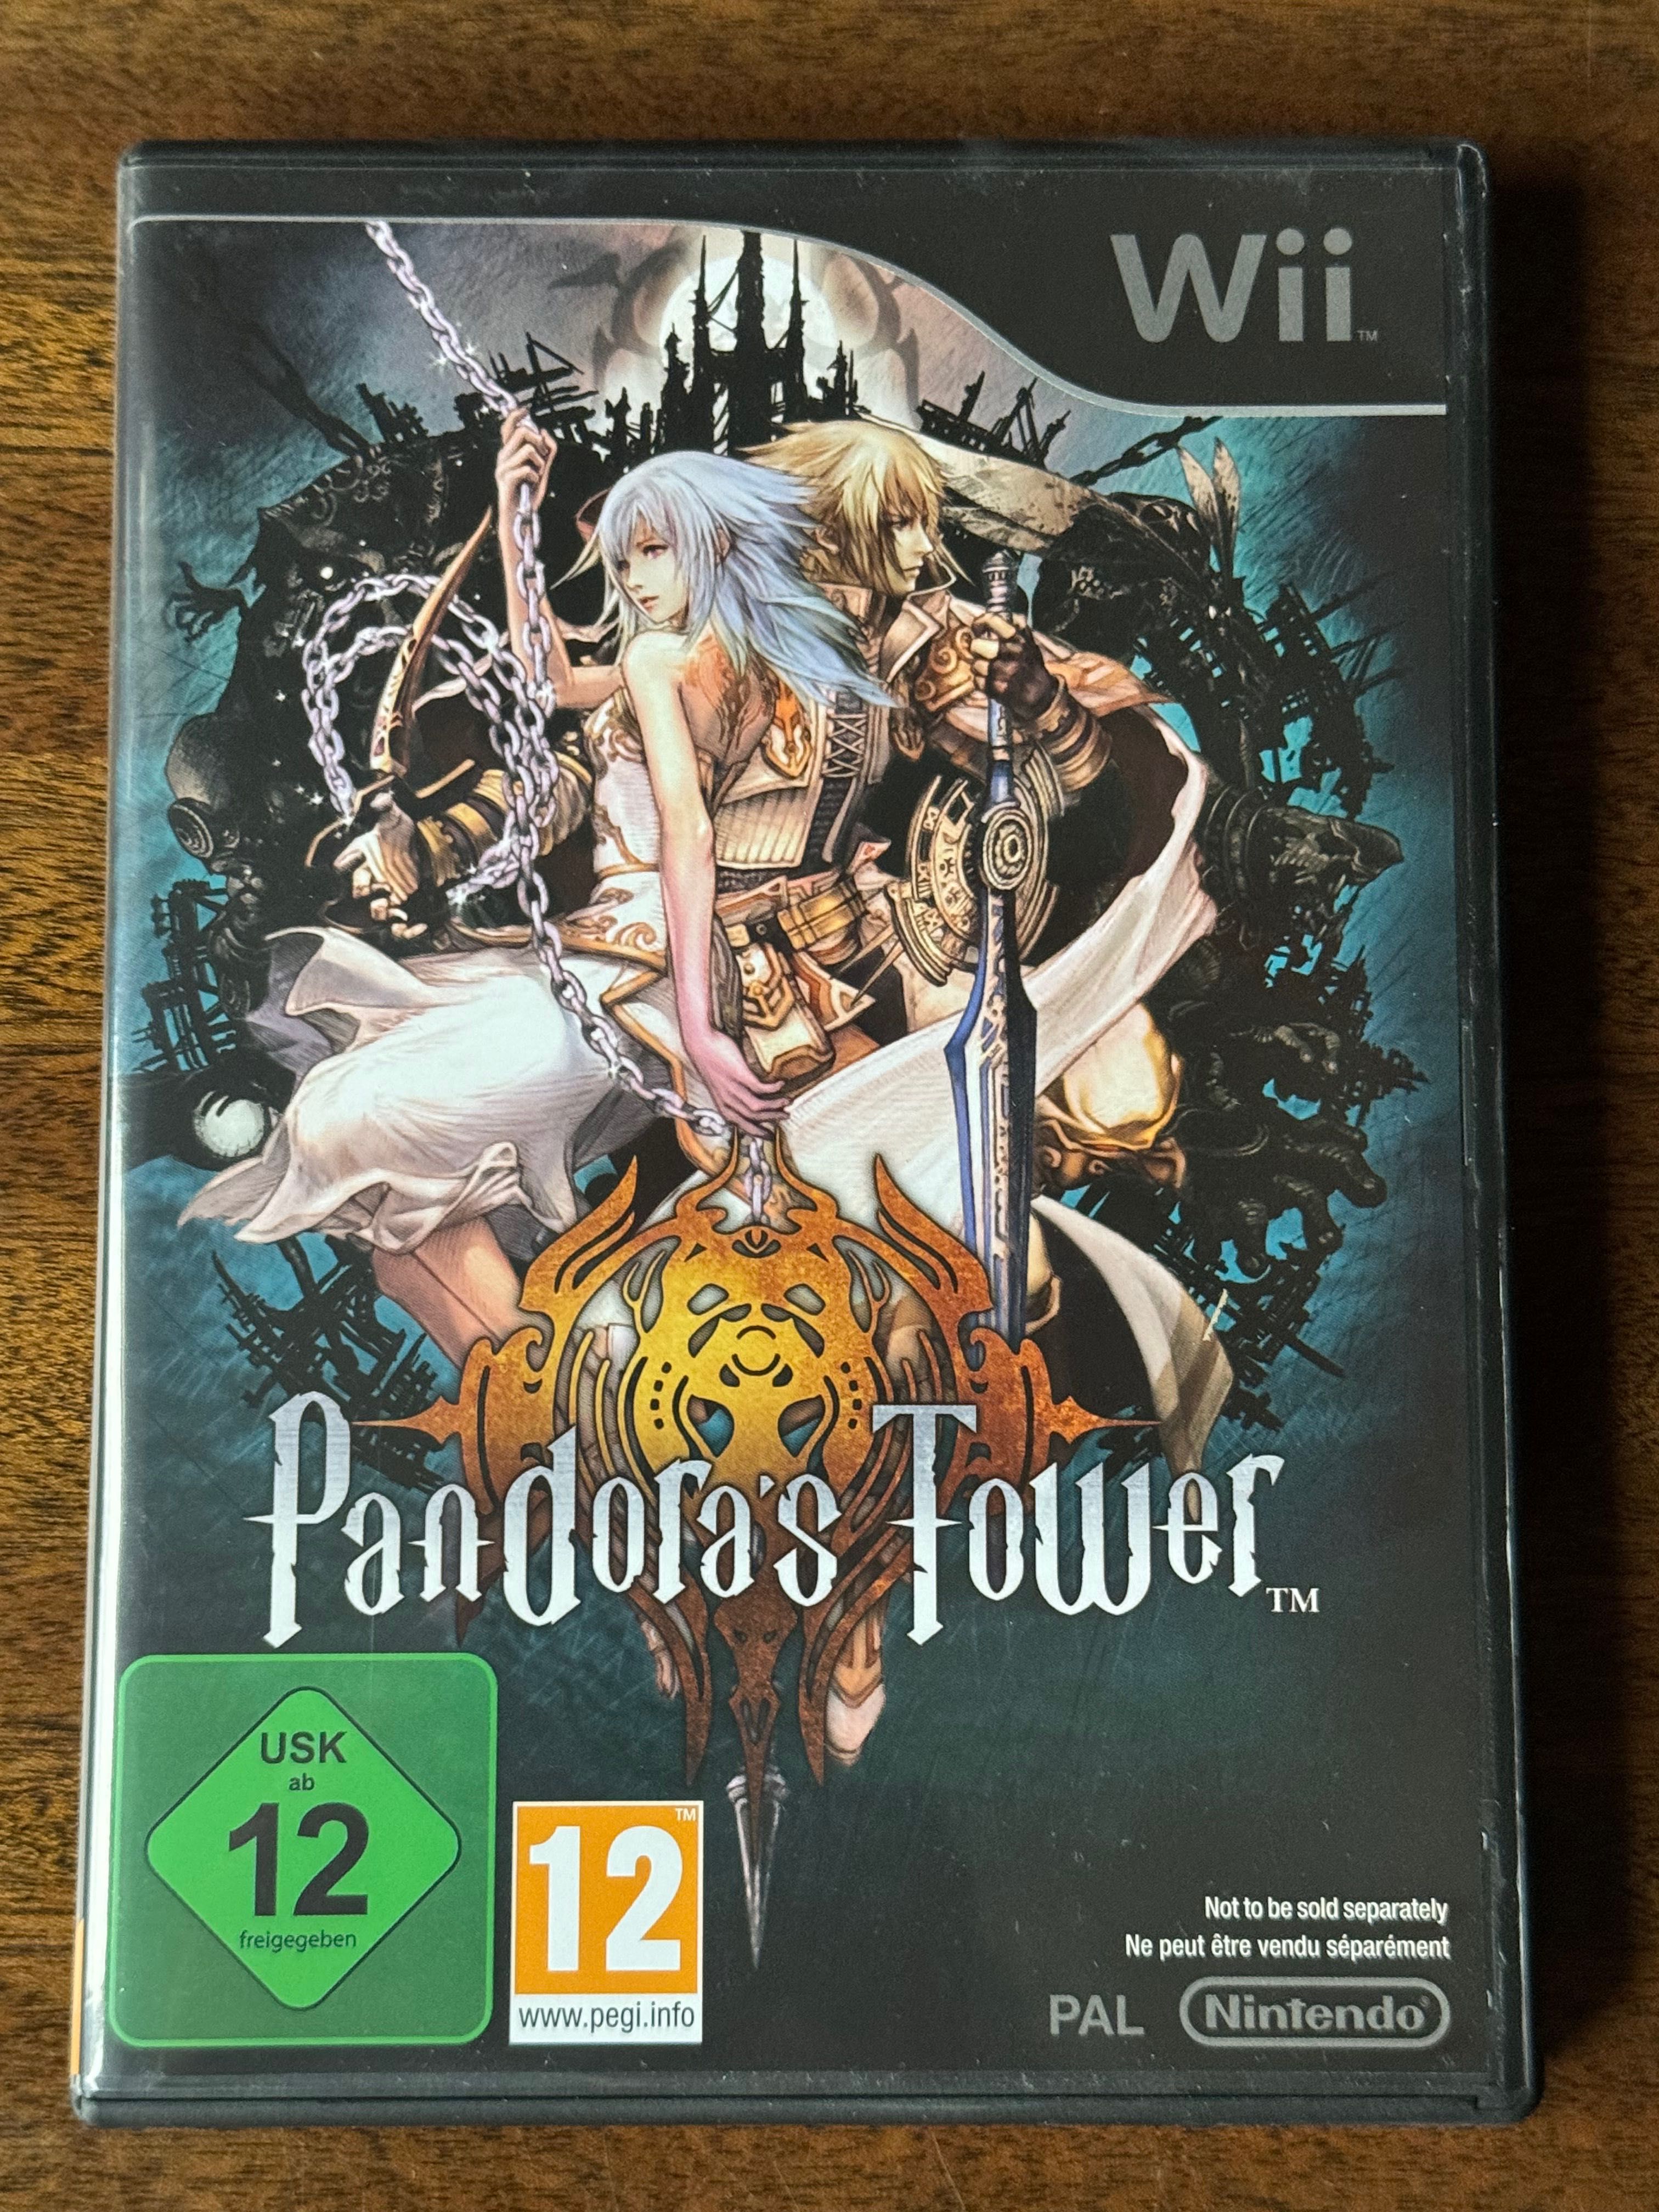 Pandora’s Tower Limited Edition Nintendo Wii komplet